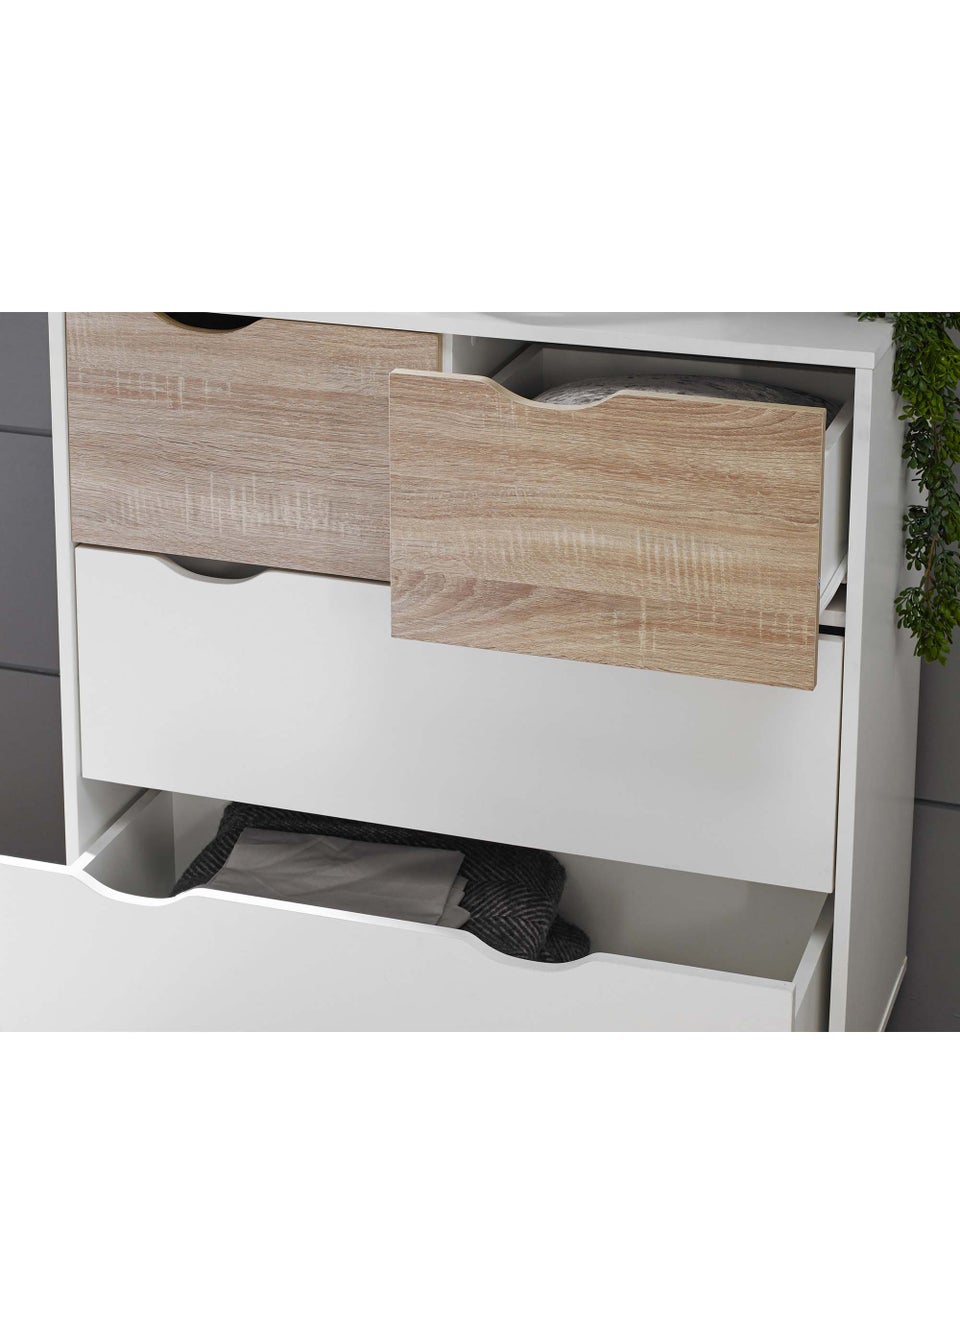 LPD Furniture Stockholm 4 Drawer Chest White-Oak (900x390x820mm)